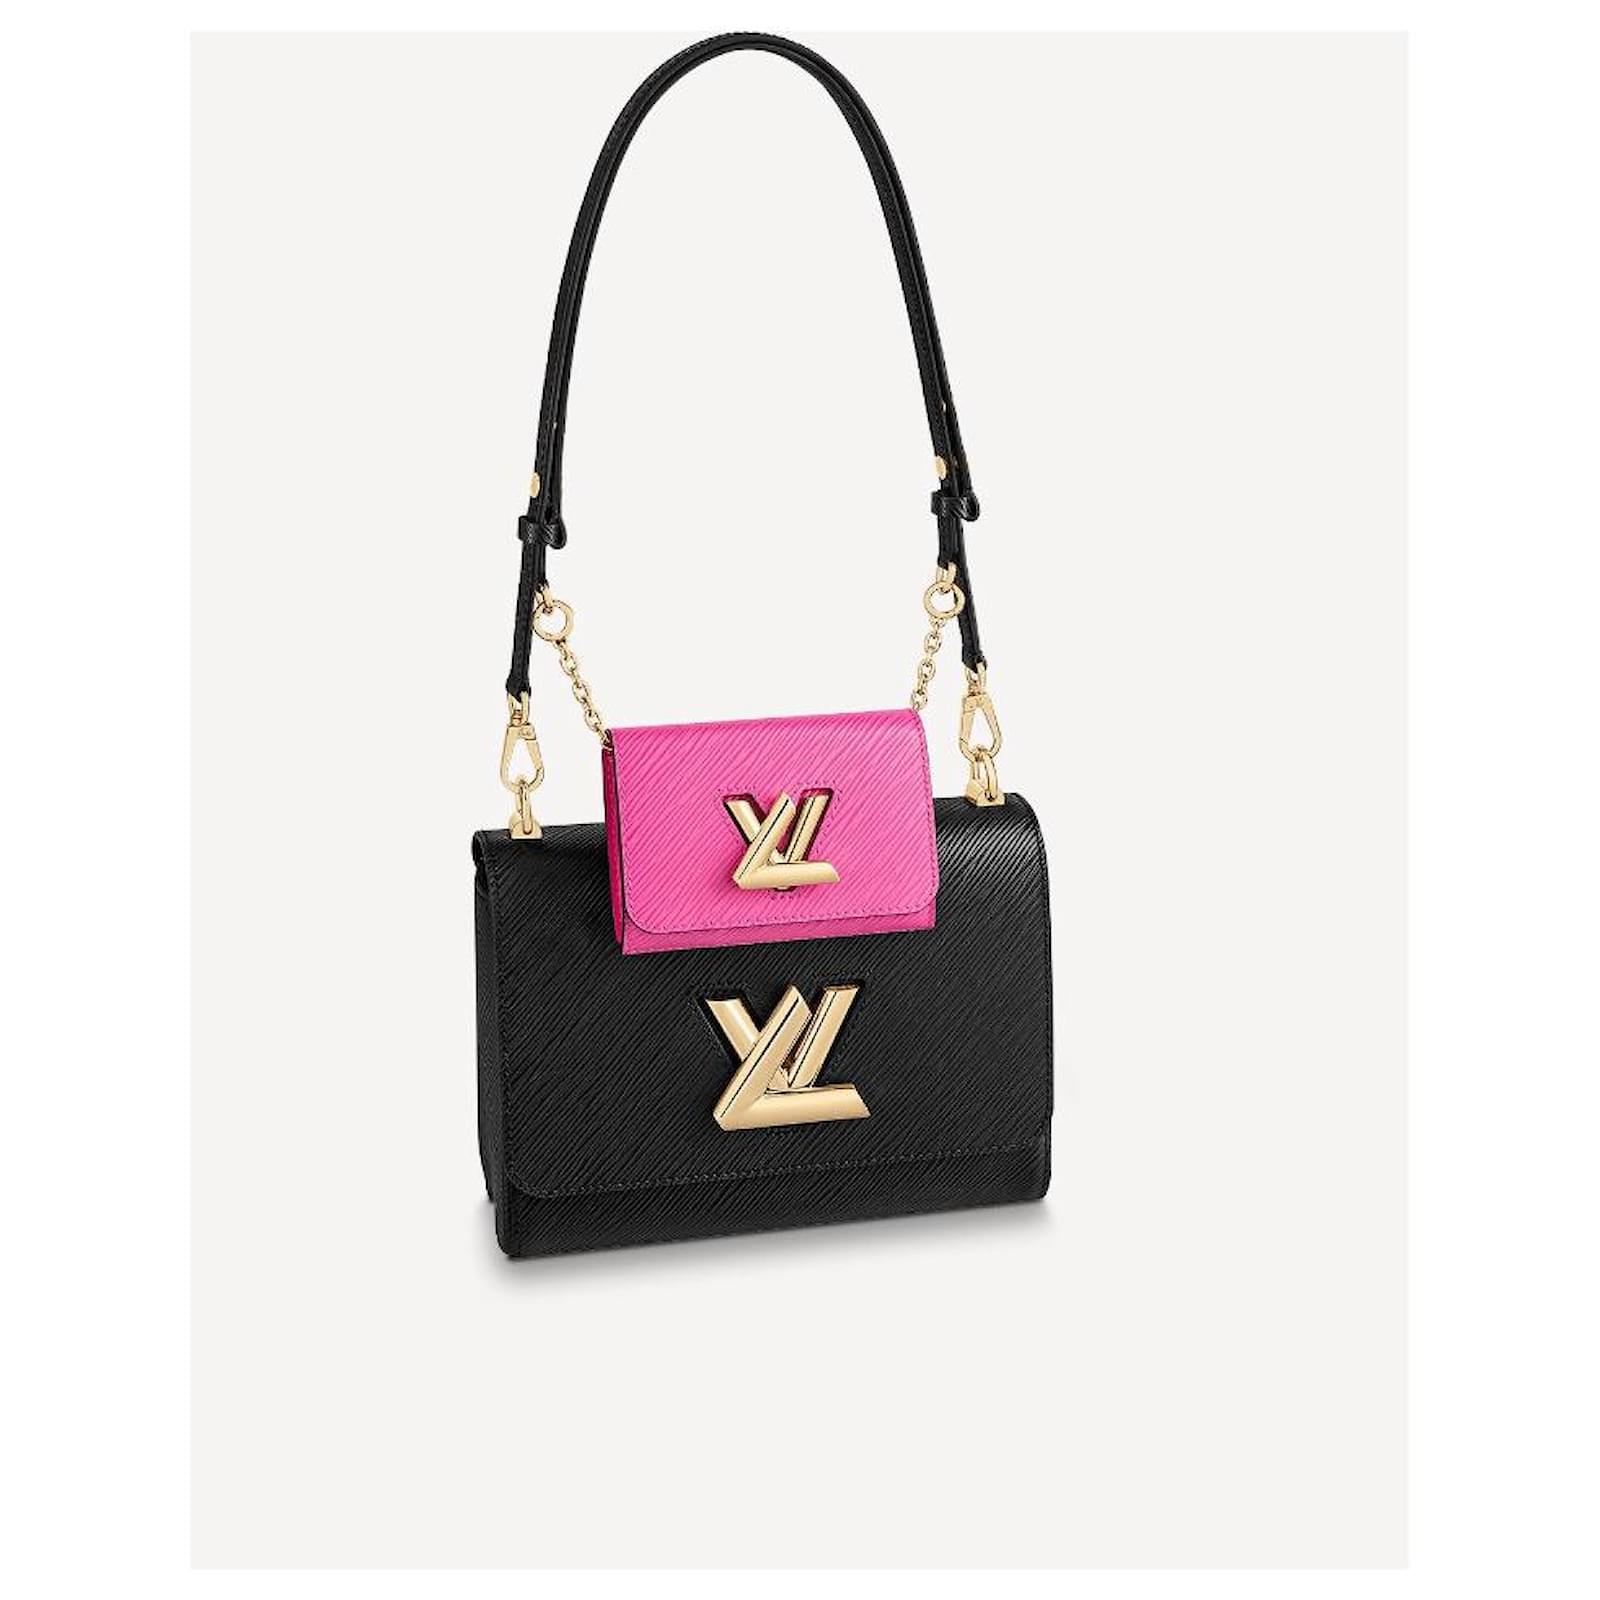 LOUIS VUITTON Handbags Louis Vuitton Patent Leather For Female for